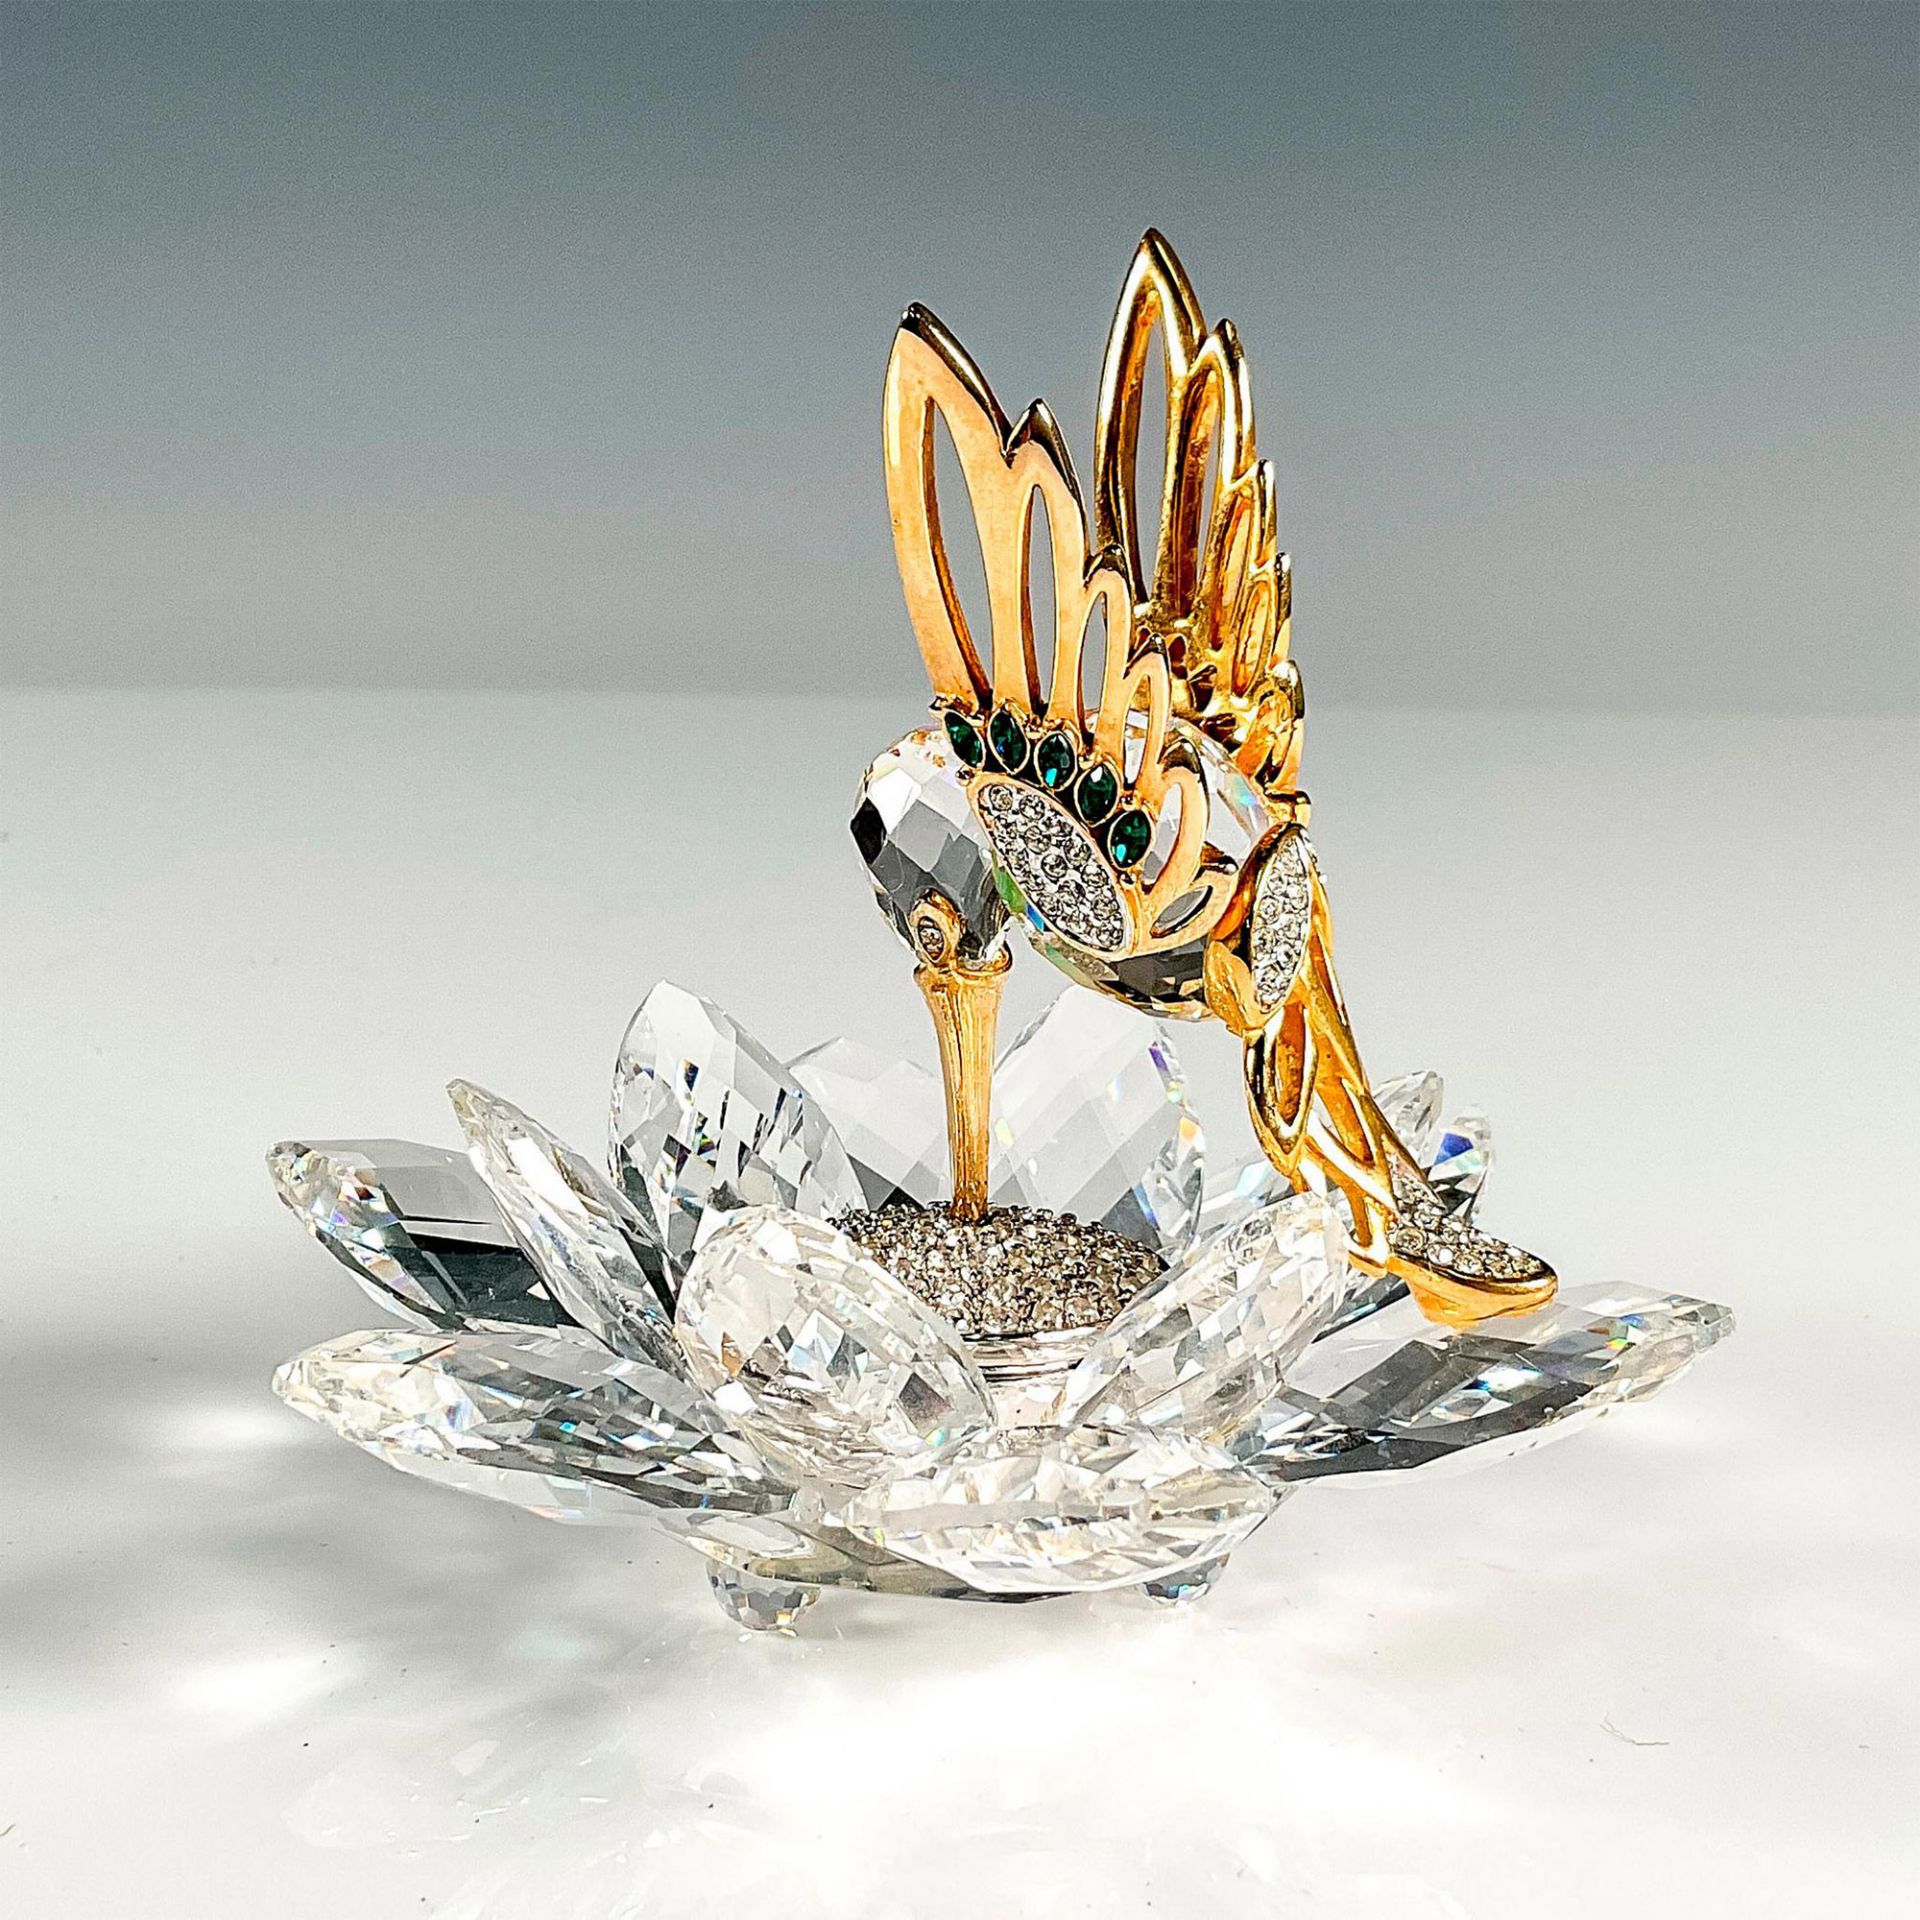 Swarovski Silver Crystal Figurine, Hummingbird in Flight - Image 2 of 4